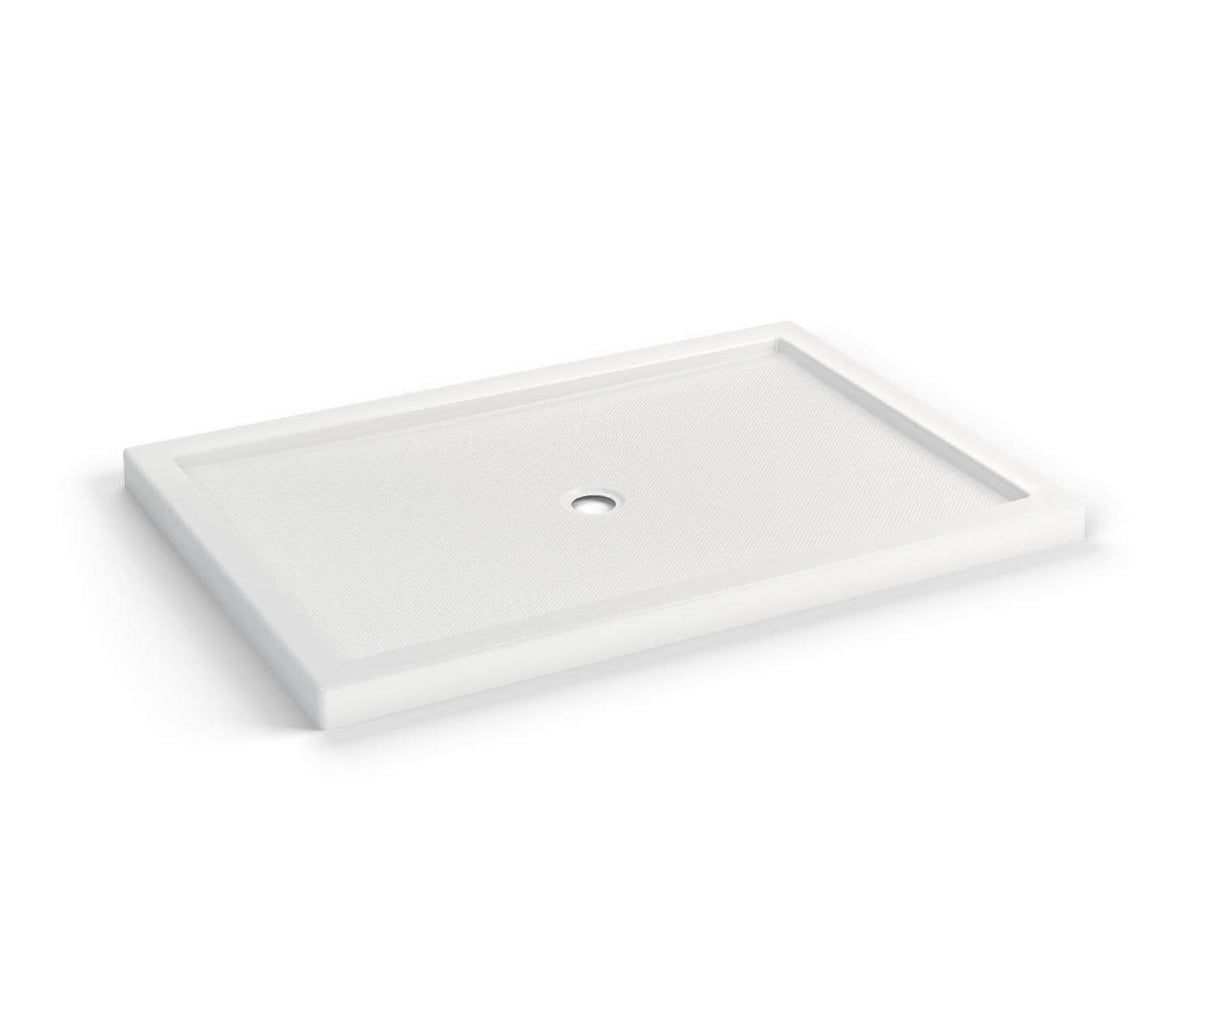 MAAX 410036-542-001-000 B3Round 6042 Acrylic Corner Left Shower Base in White with Anti-slip Bottom with Center Drain